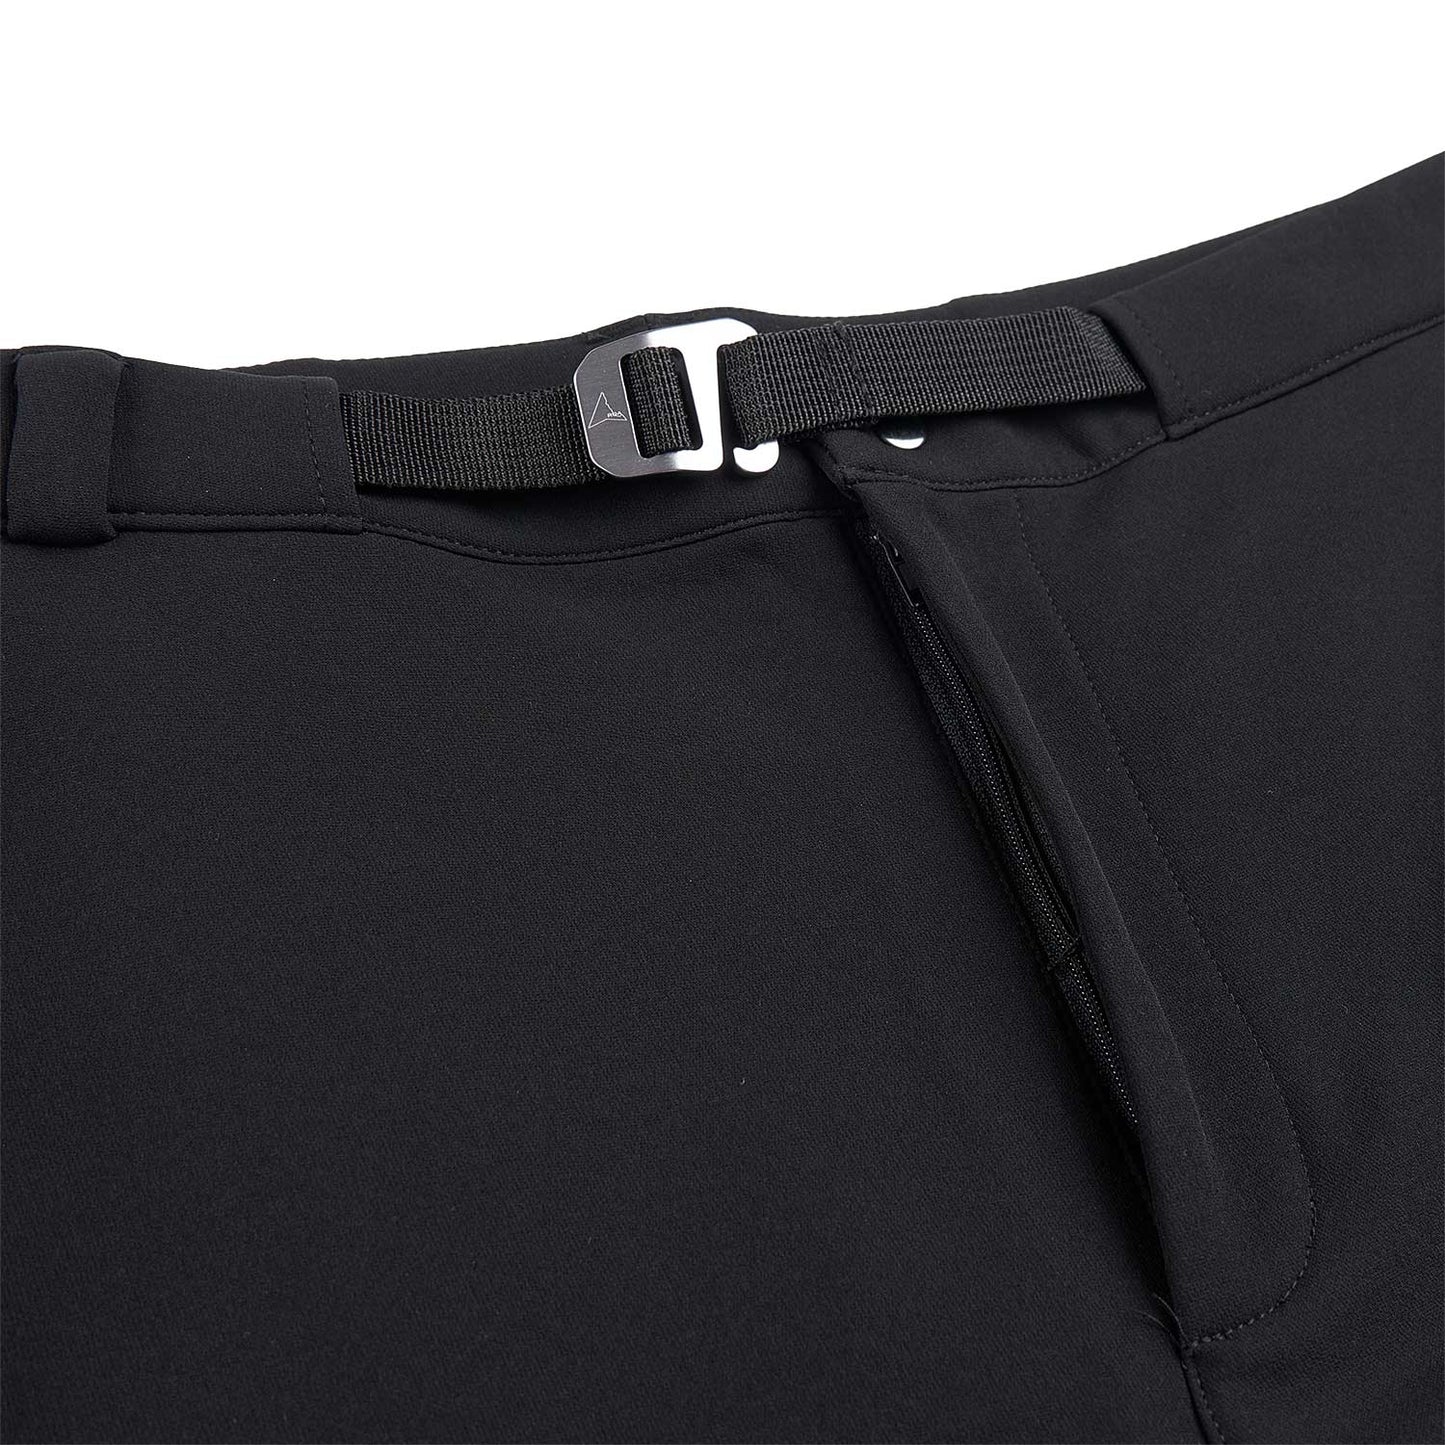 roa technical trousers softshell (black)